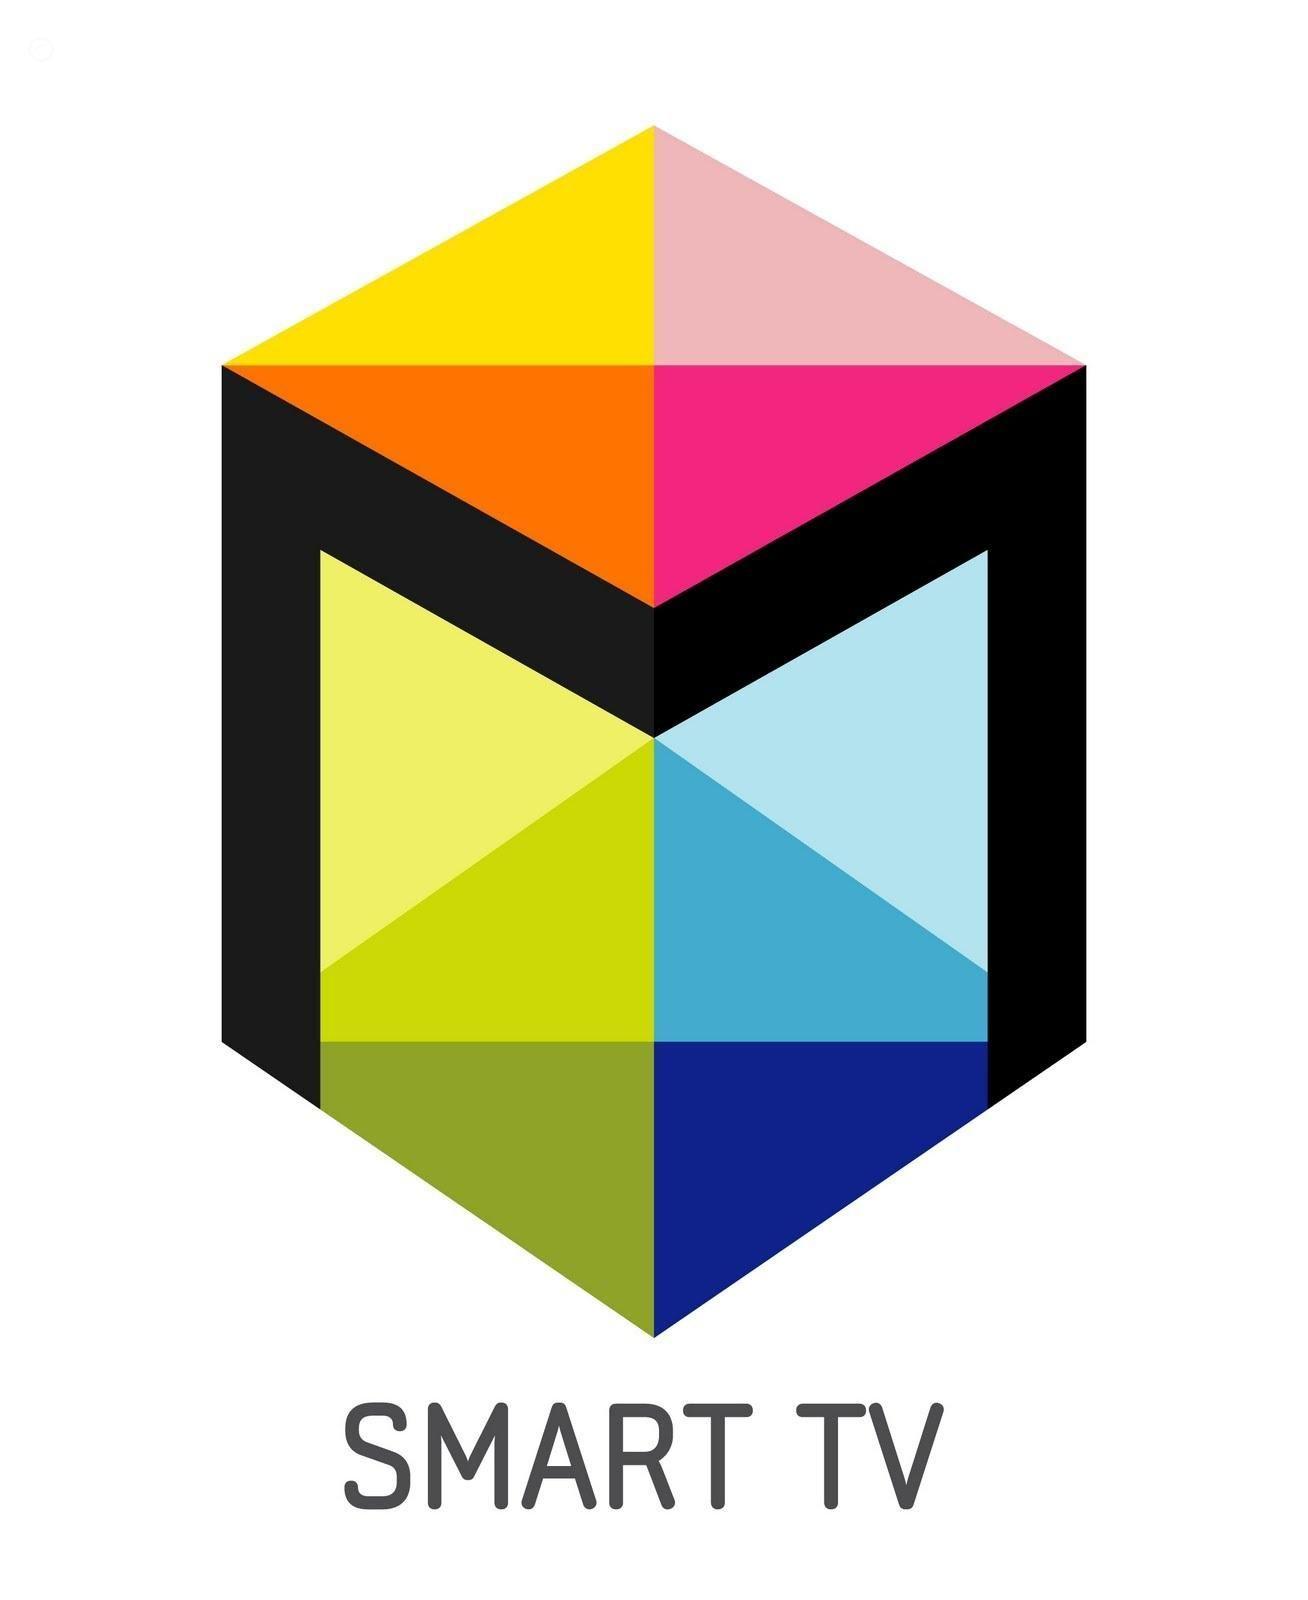 Smart TV Logo - Pin by Aidan Kenny on Logos | Smart TV, Samsung smart tv, Branding